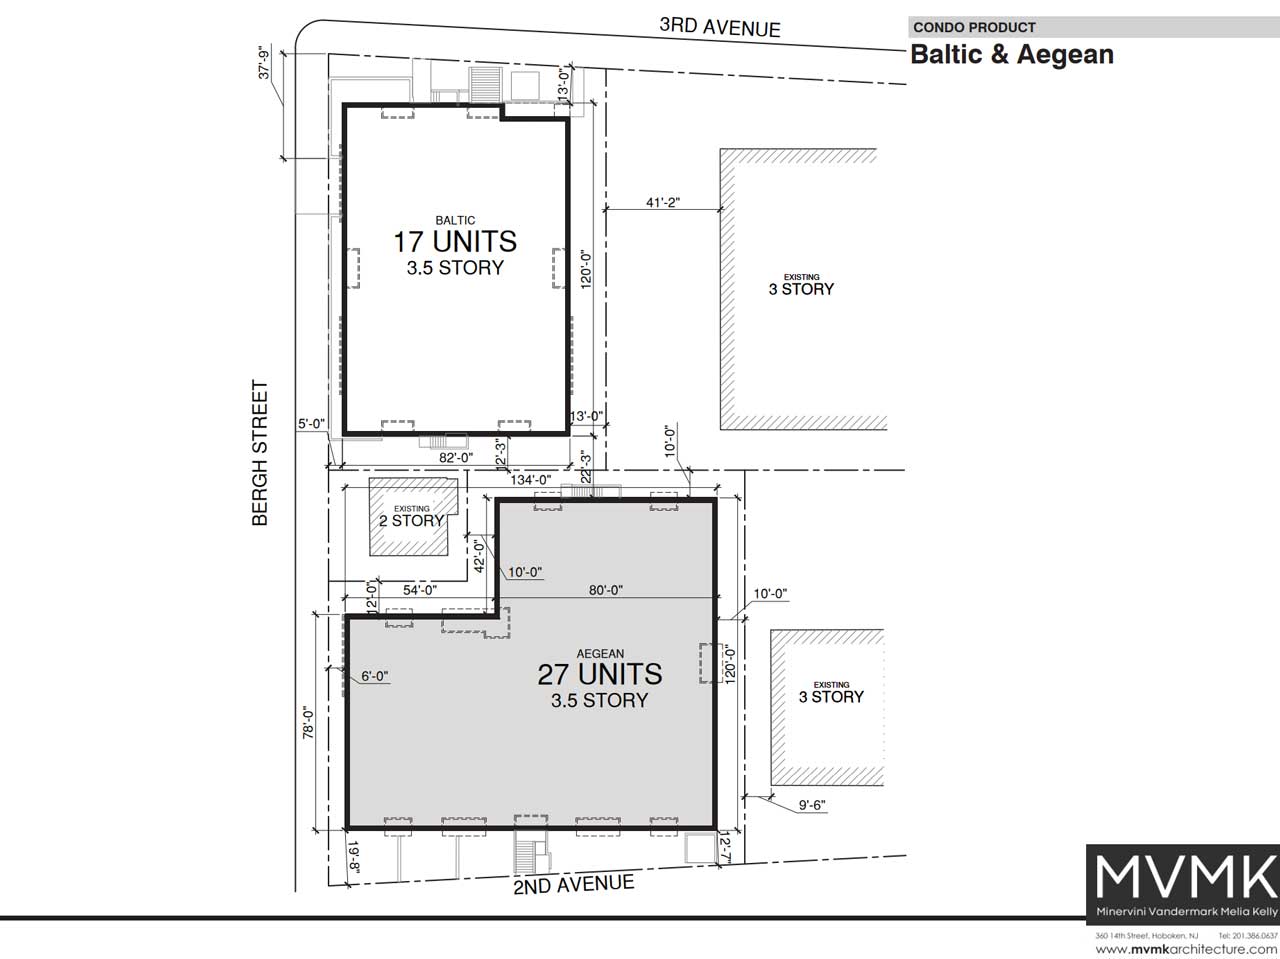 New Condo Development Asbury Park Site Plan